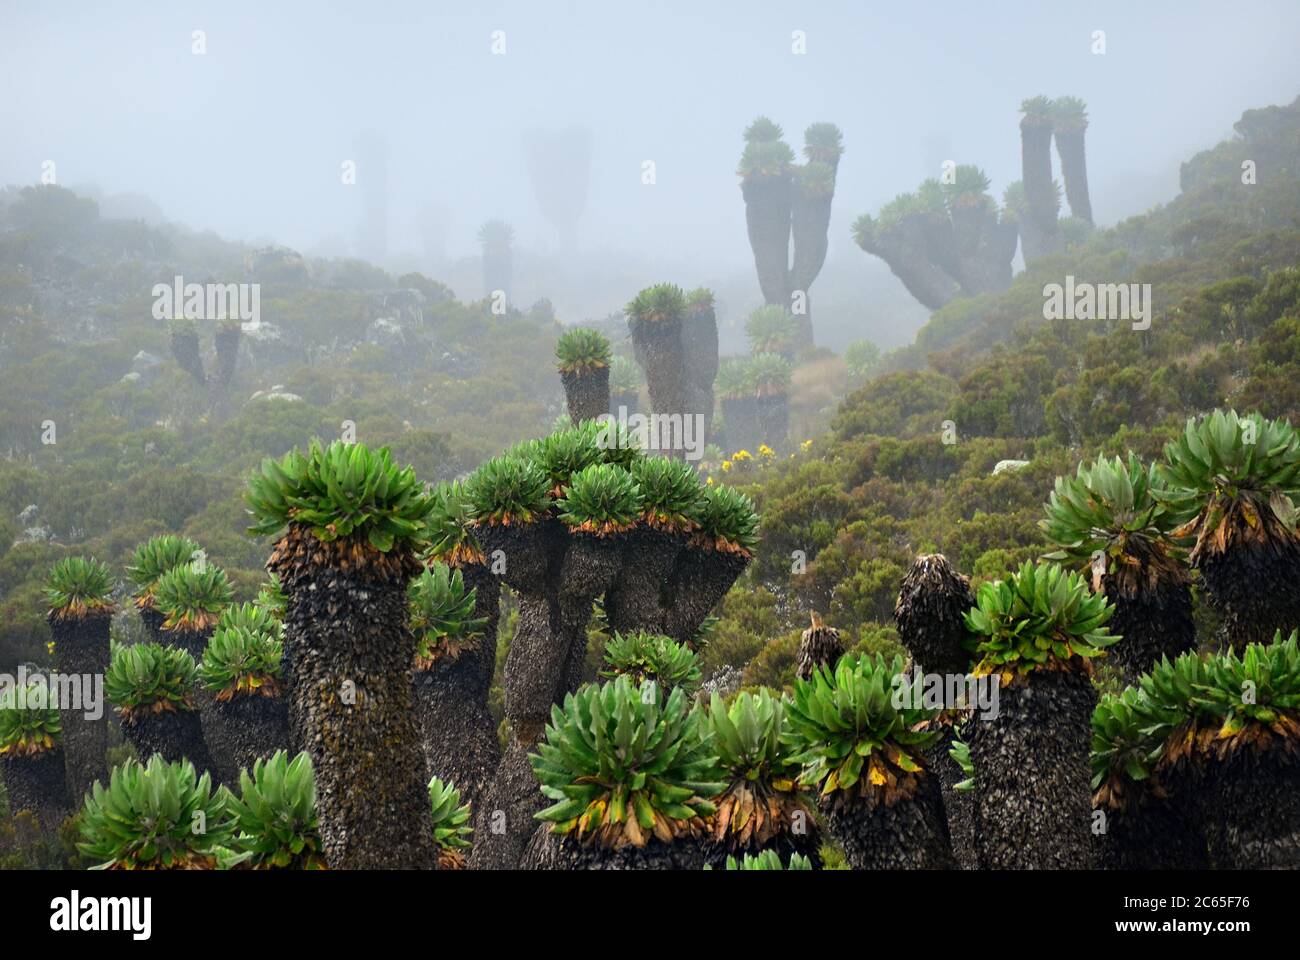 Endemic plants are Senecio Kilimanjari shown at dawn. This plant is grown only around Kilimanjaro mount. Early evening fog. Tanzania, Africa Stock Photo